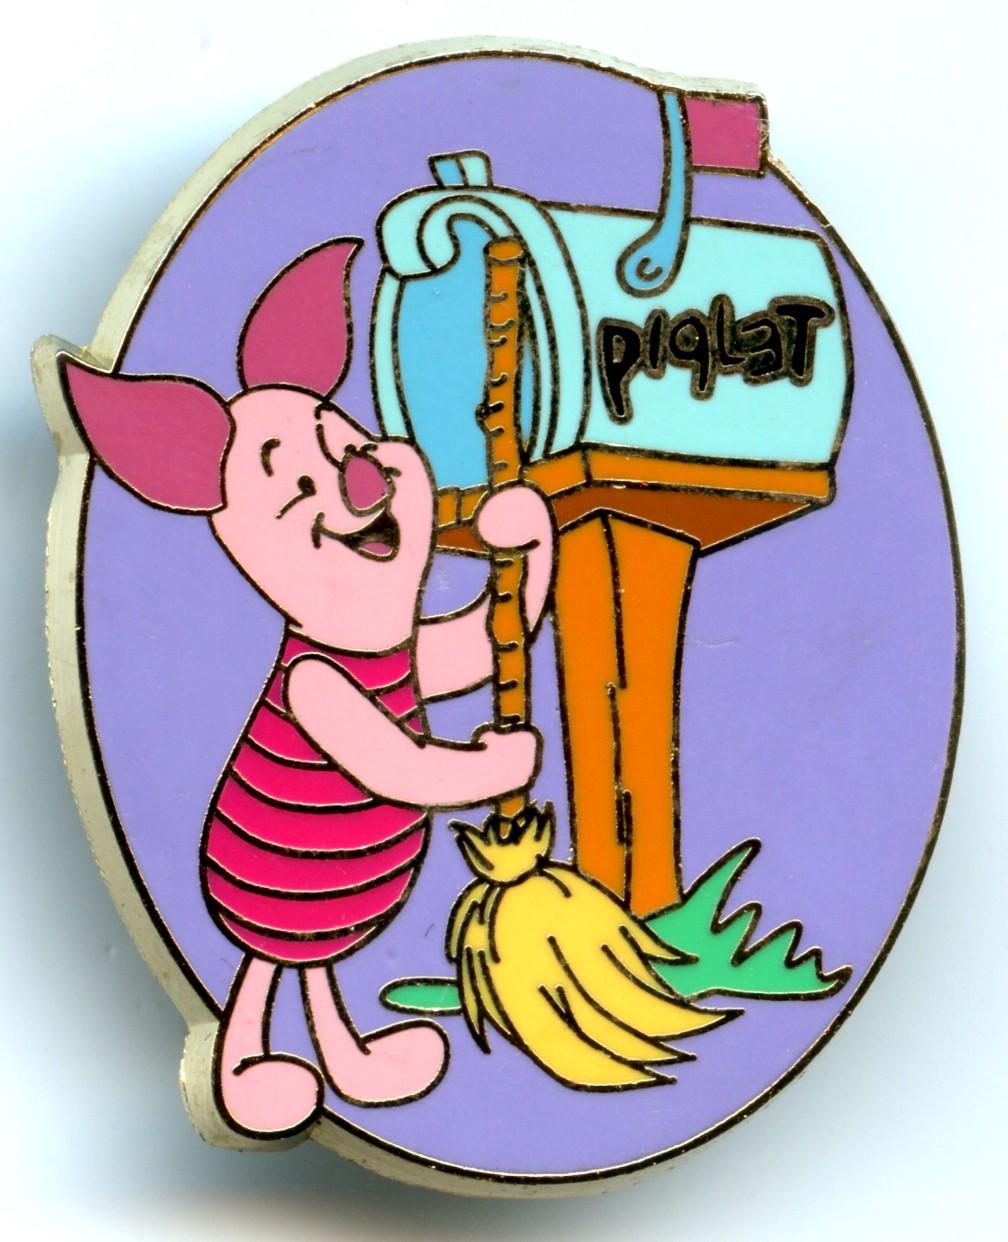 DS - Piglet - Pooh's 100 Acre Wood Series - Mailbox - Sweeping - Broom - Winnie the Pooh